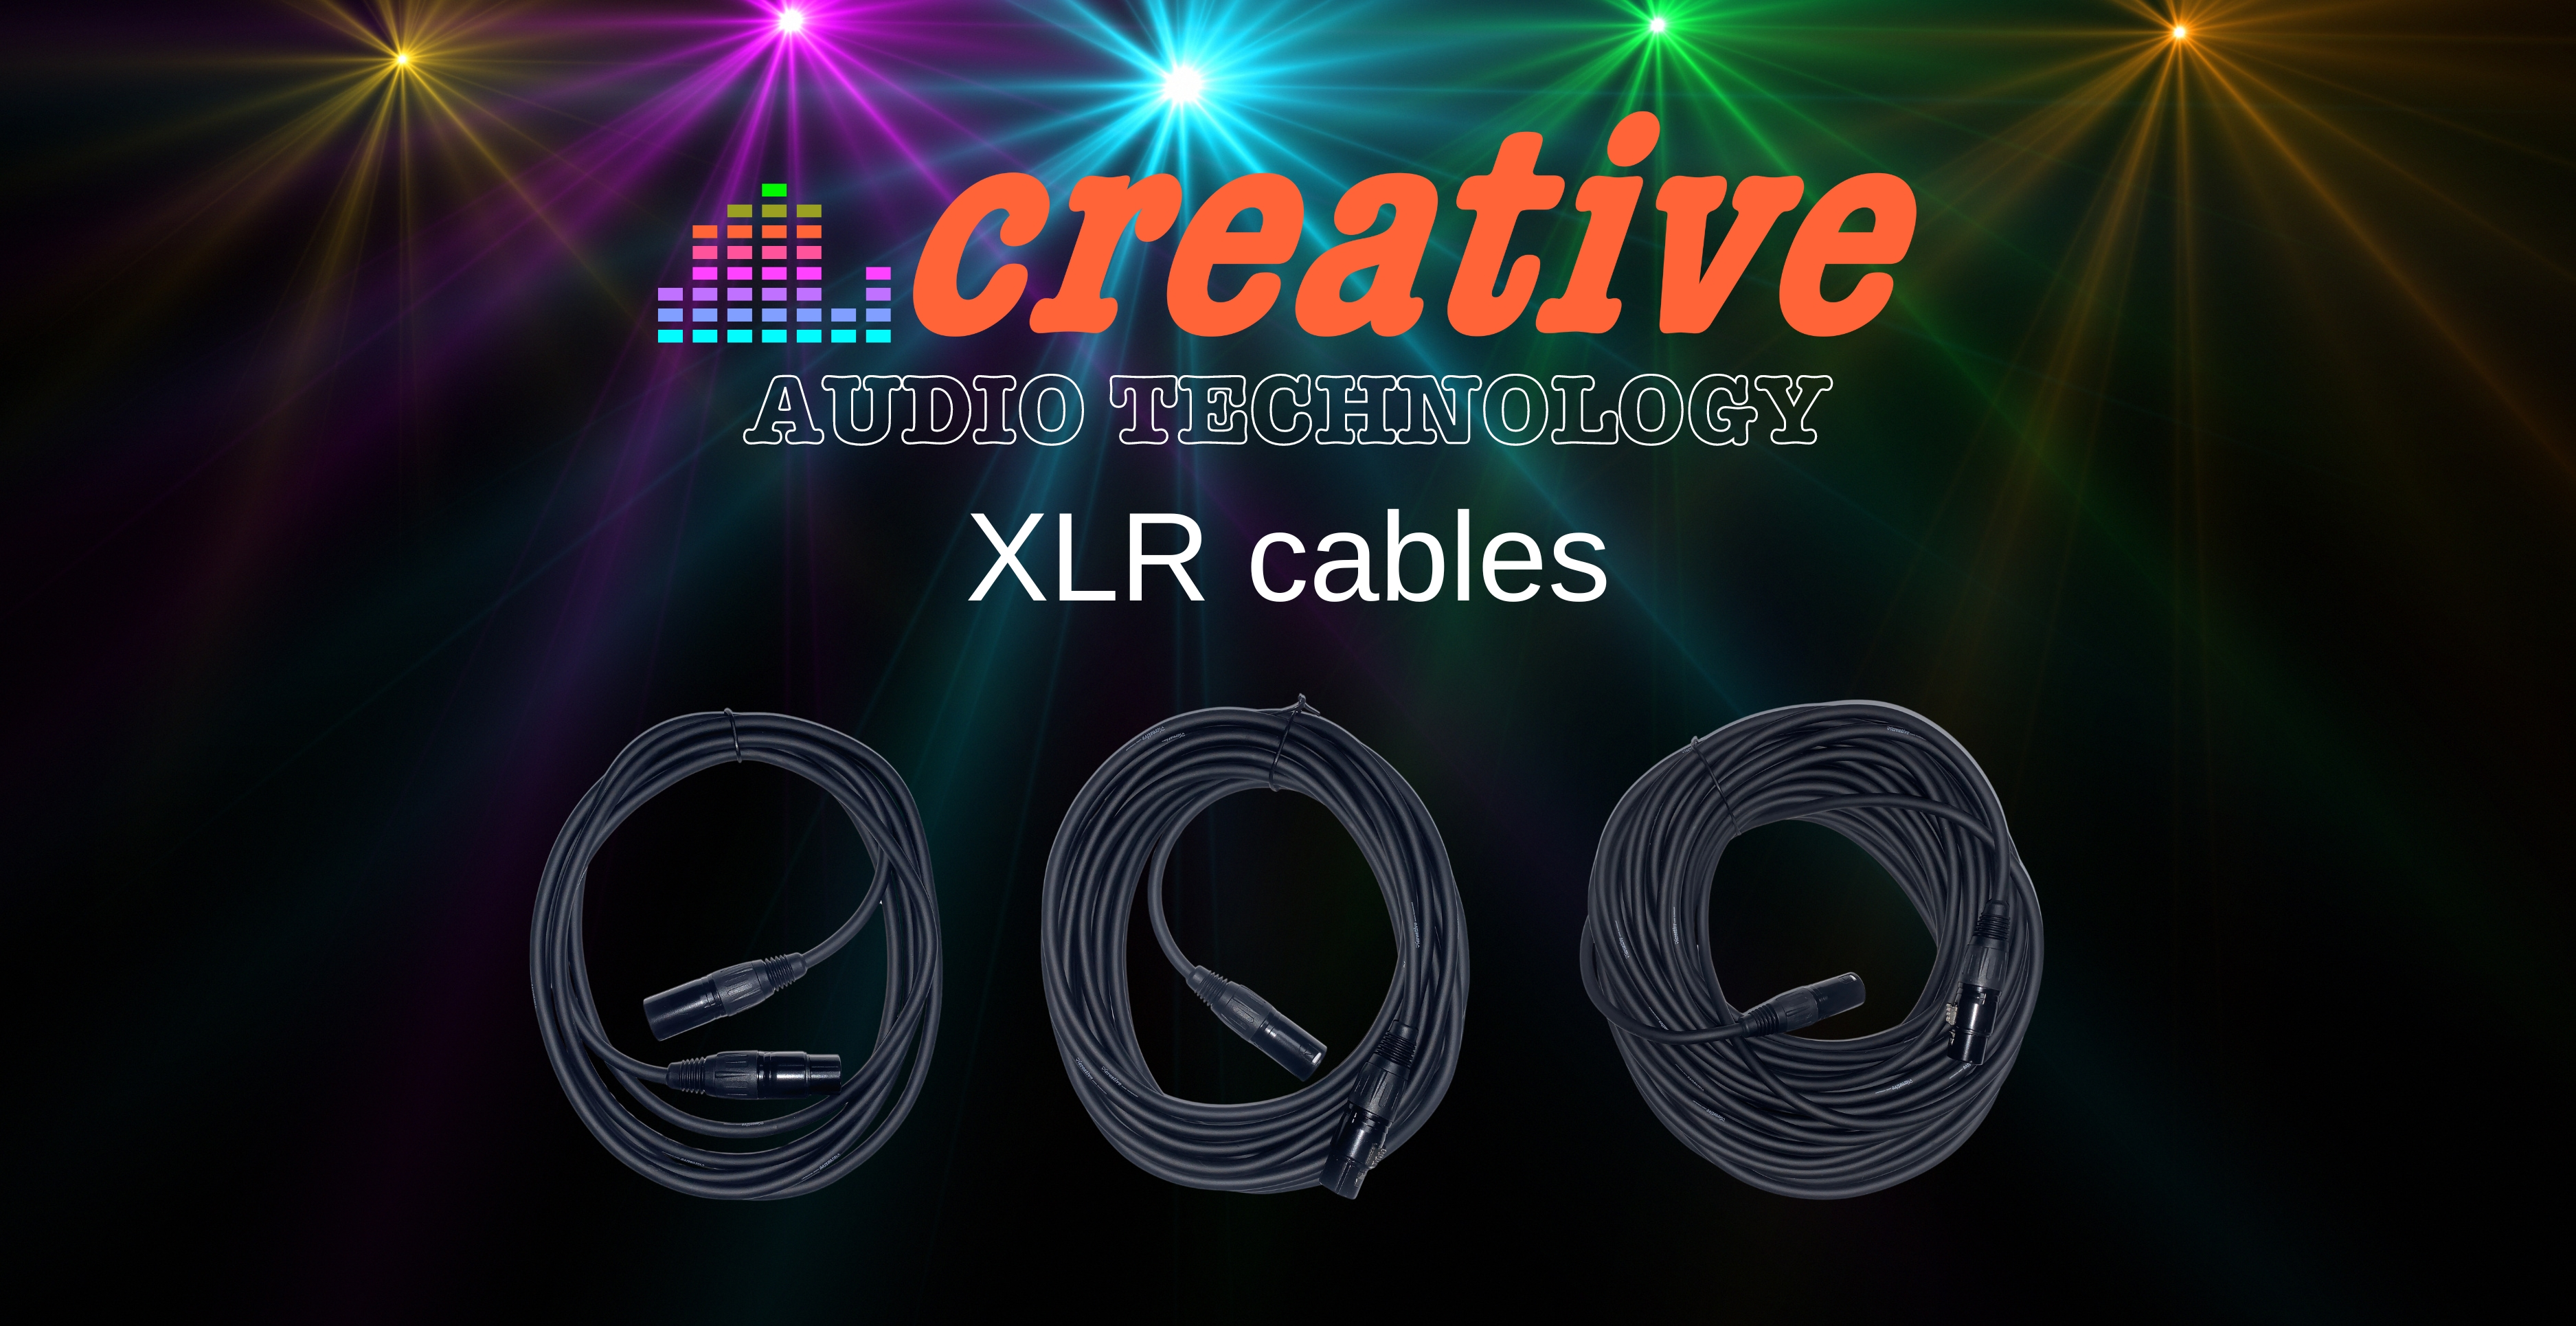 M1 Cables - Microphone XLR